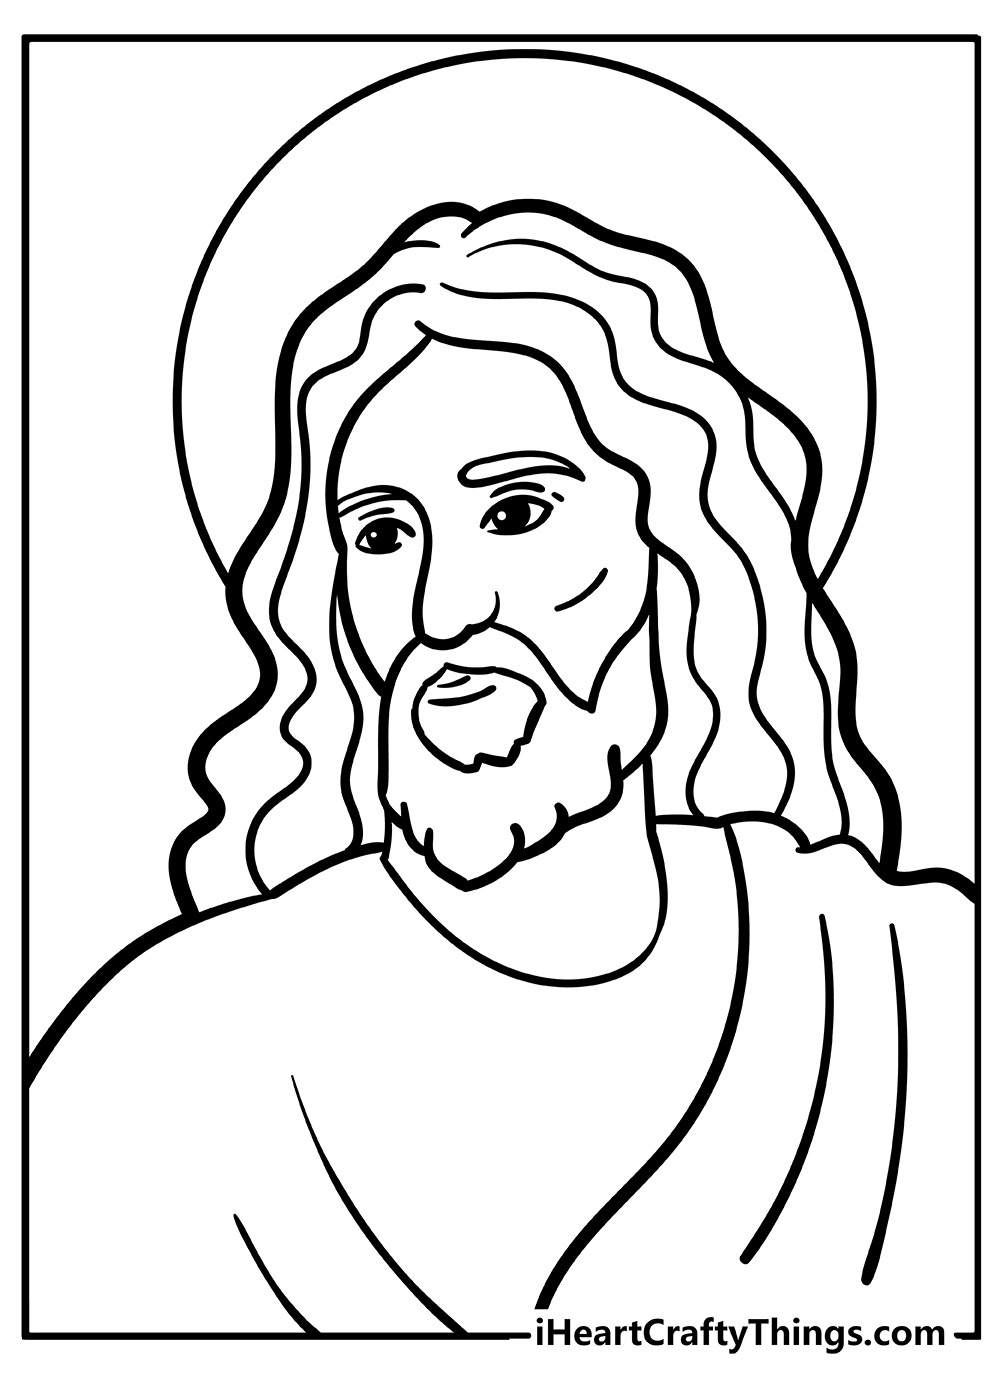 Jesus Coloring Pages free pdf download